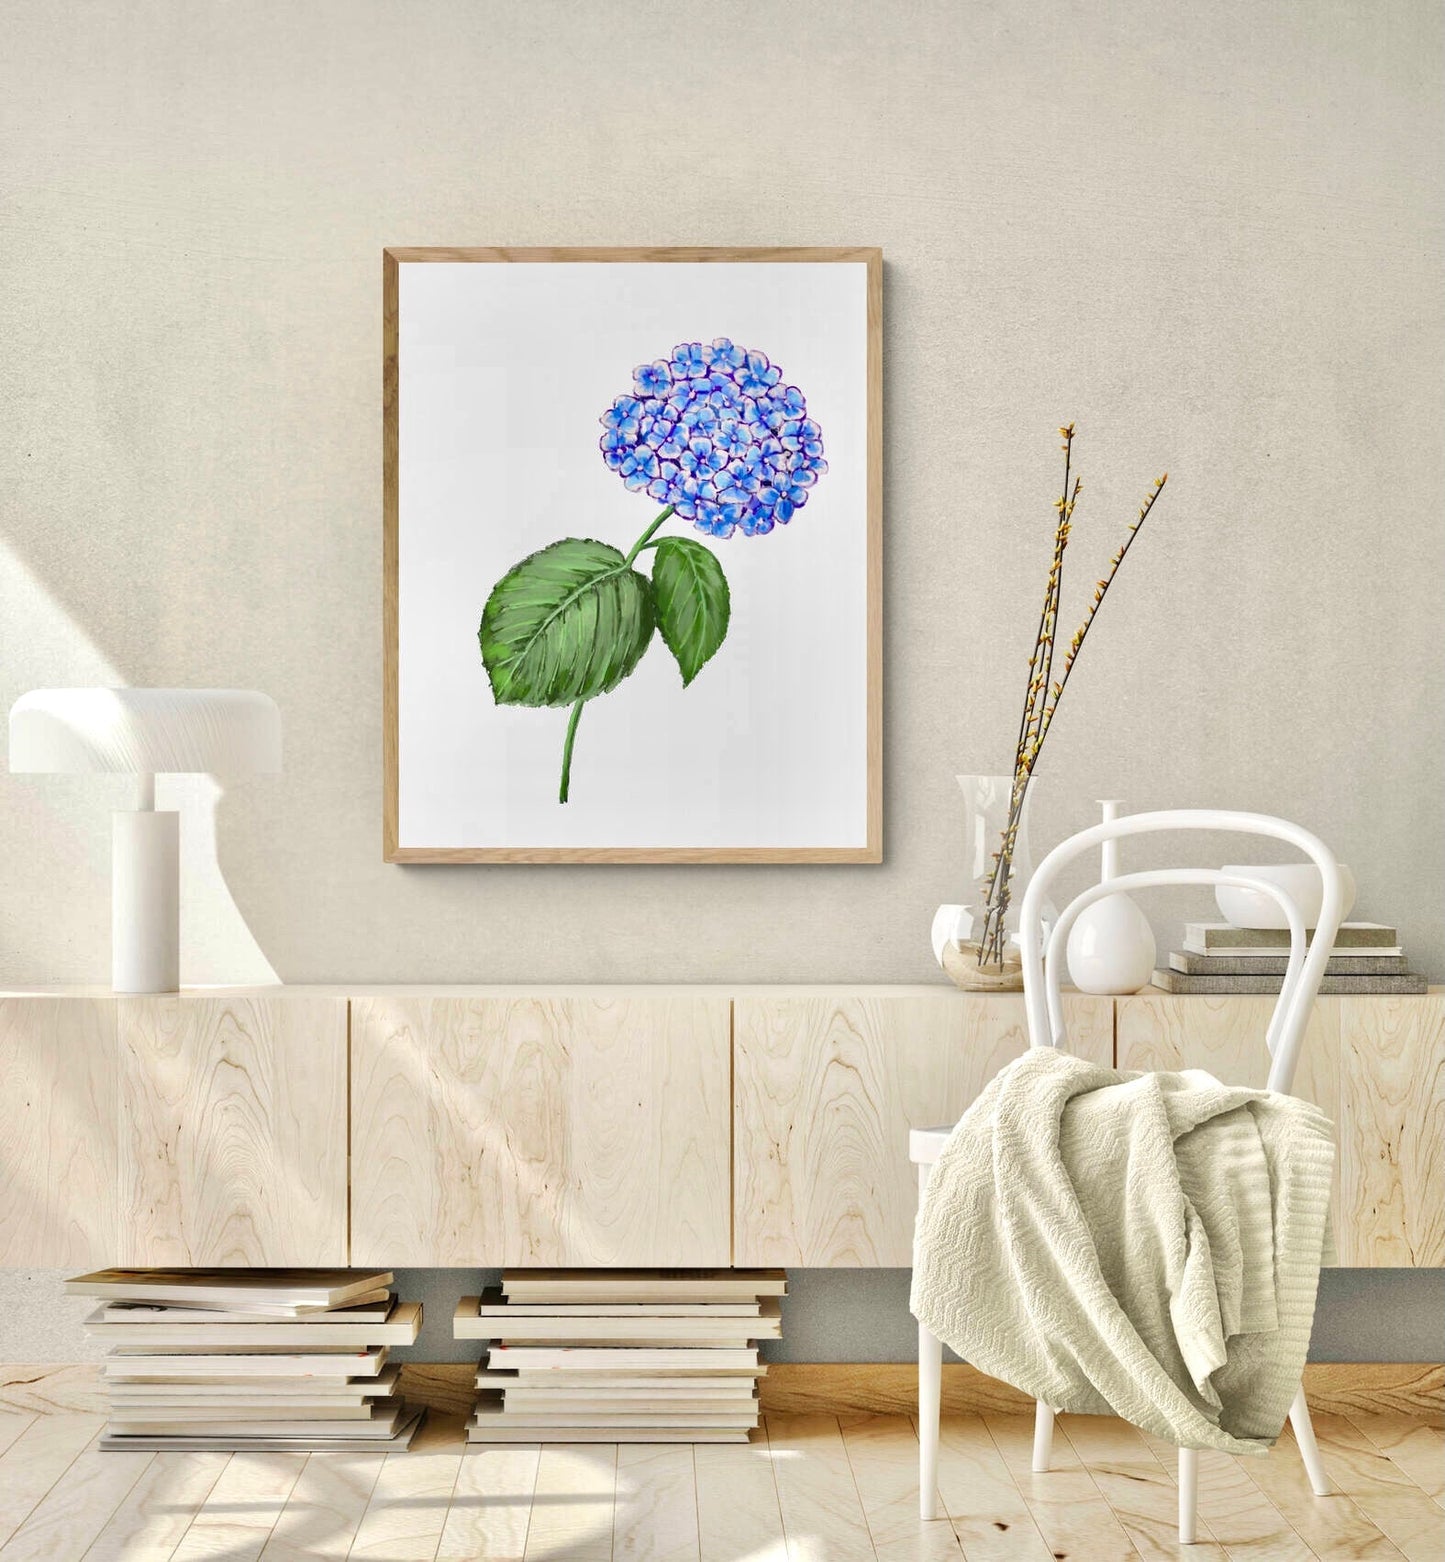 Hydrangea Art Print, Flower Wall Art, Kitchen Wall Hanging, Dining Room Decor, Blue Flower Painting Illustration, Farmhouse Wall Decor